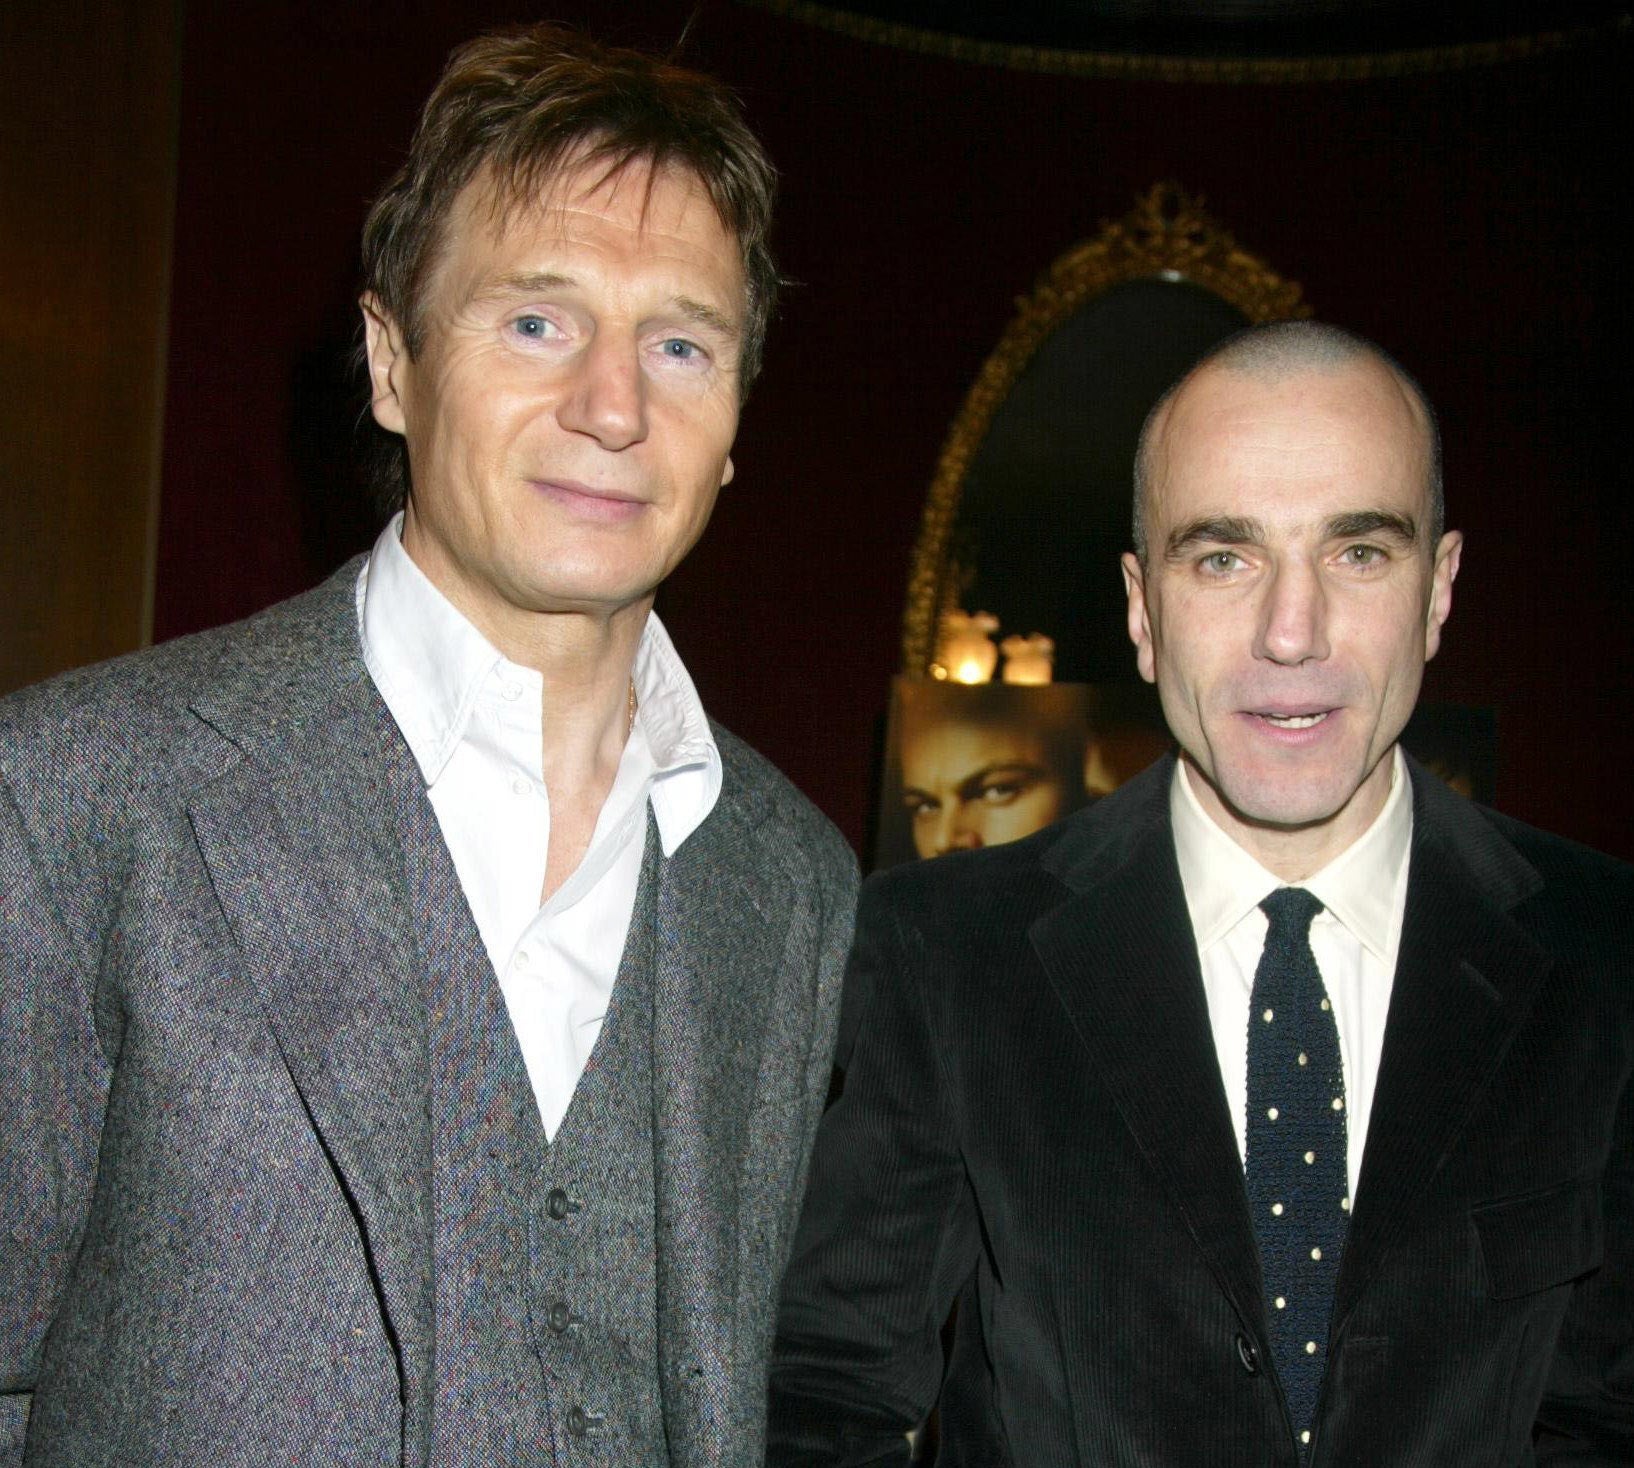 Liam Neeson posing next to Daniel Day Lewis